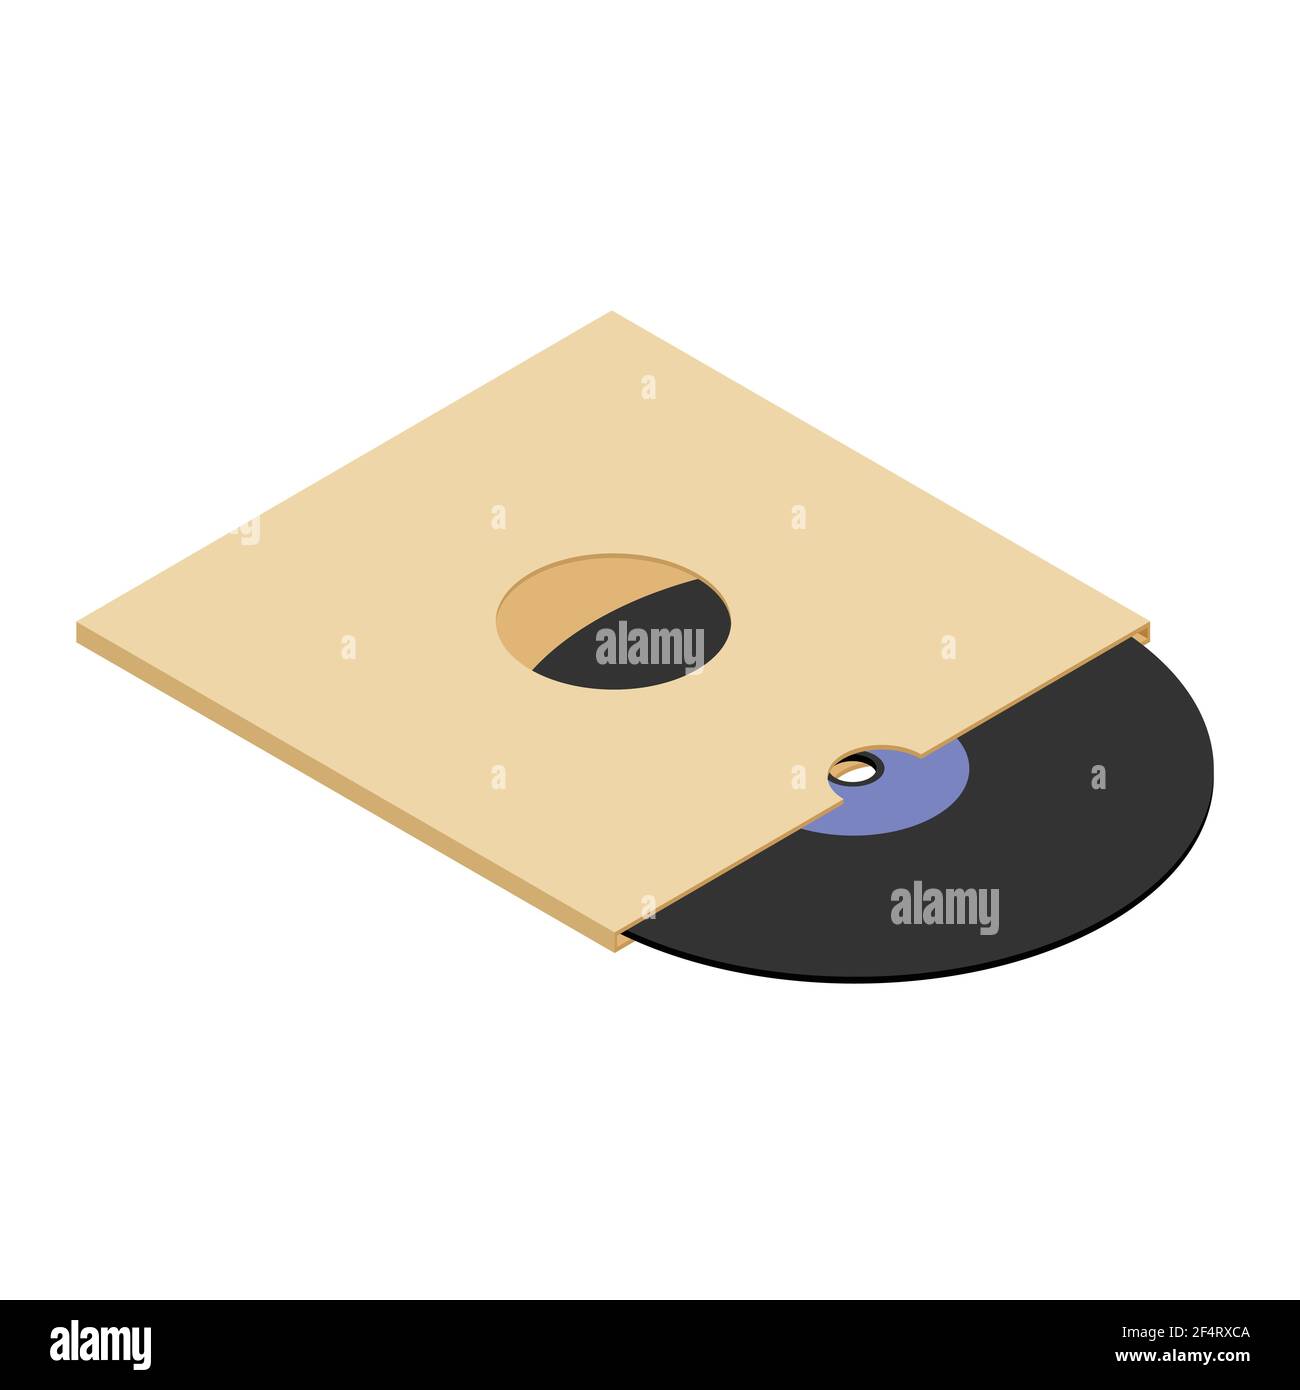 Blank record sleeve -Fotos und -Bildmaterial in hoher Auflösung – Alamy